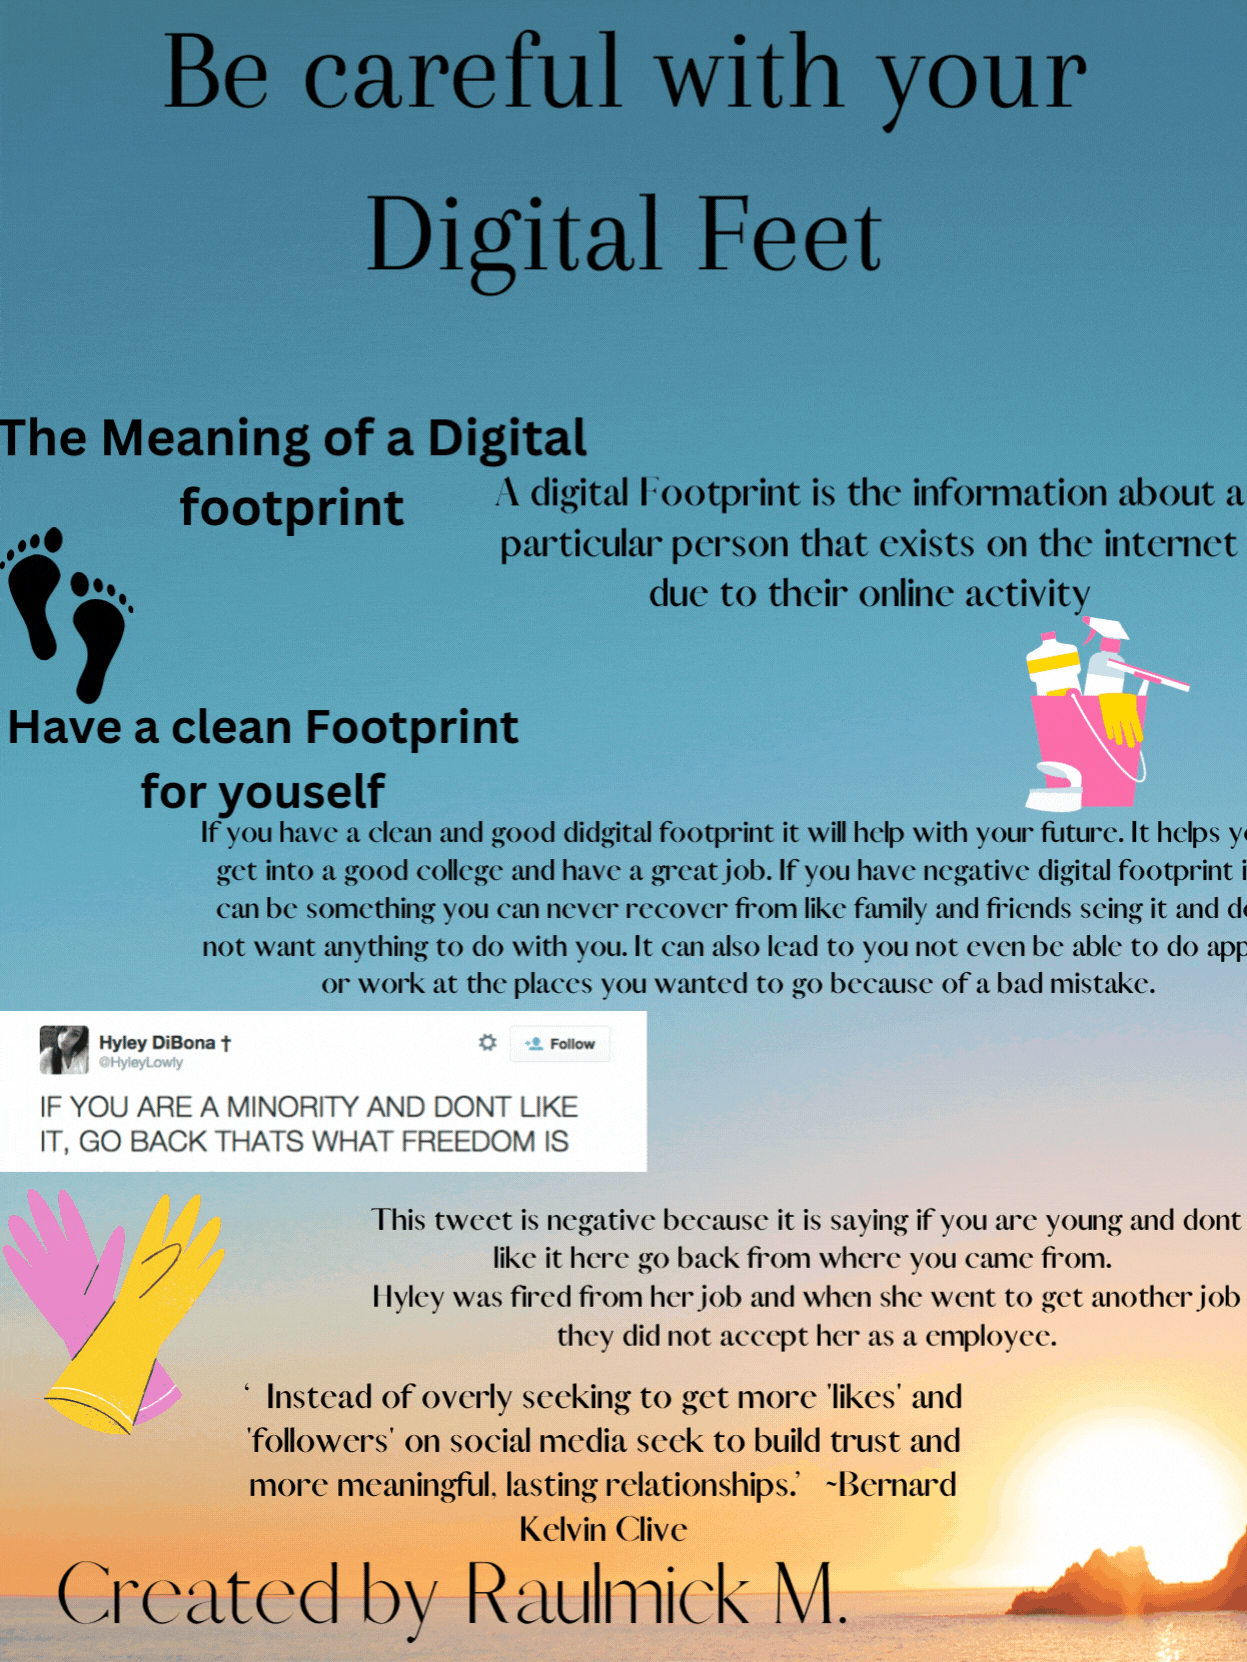 Digital Footprint Poster - Raulmick M.